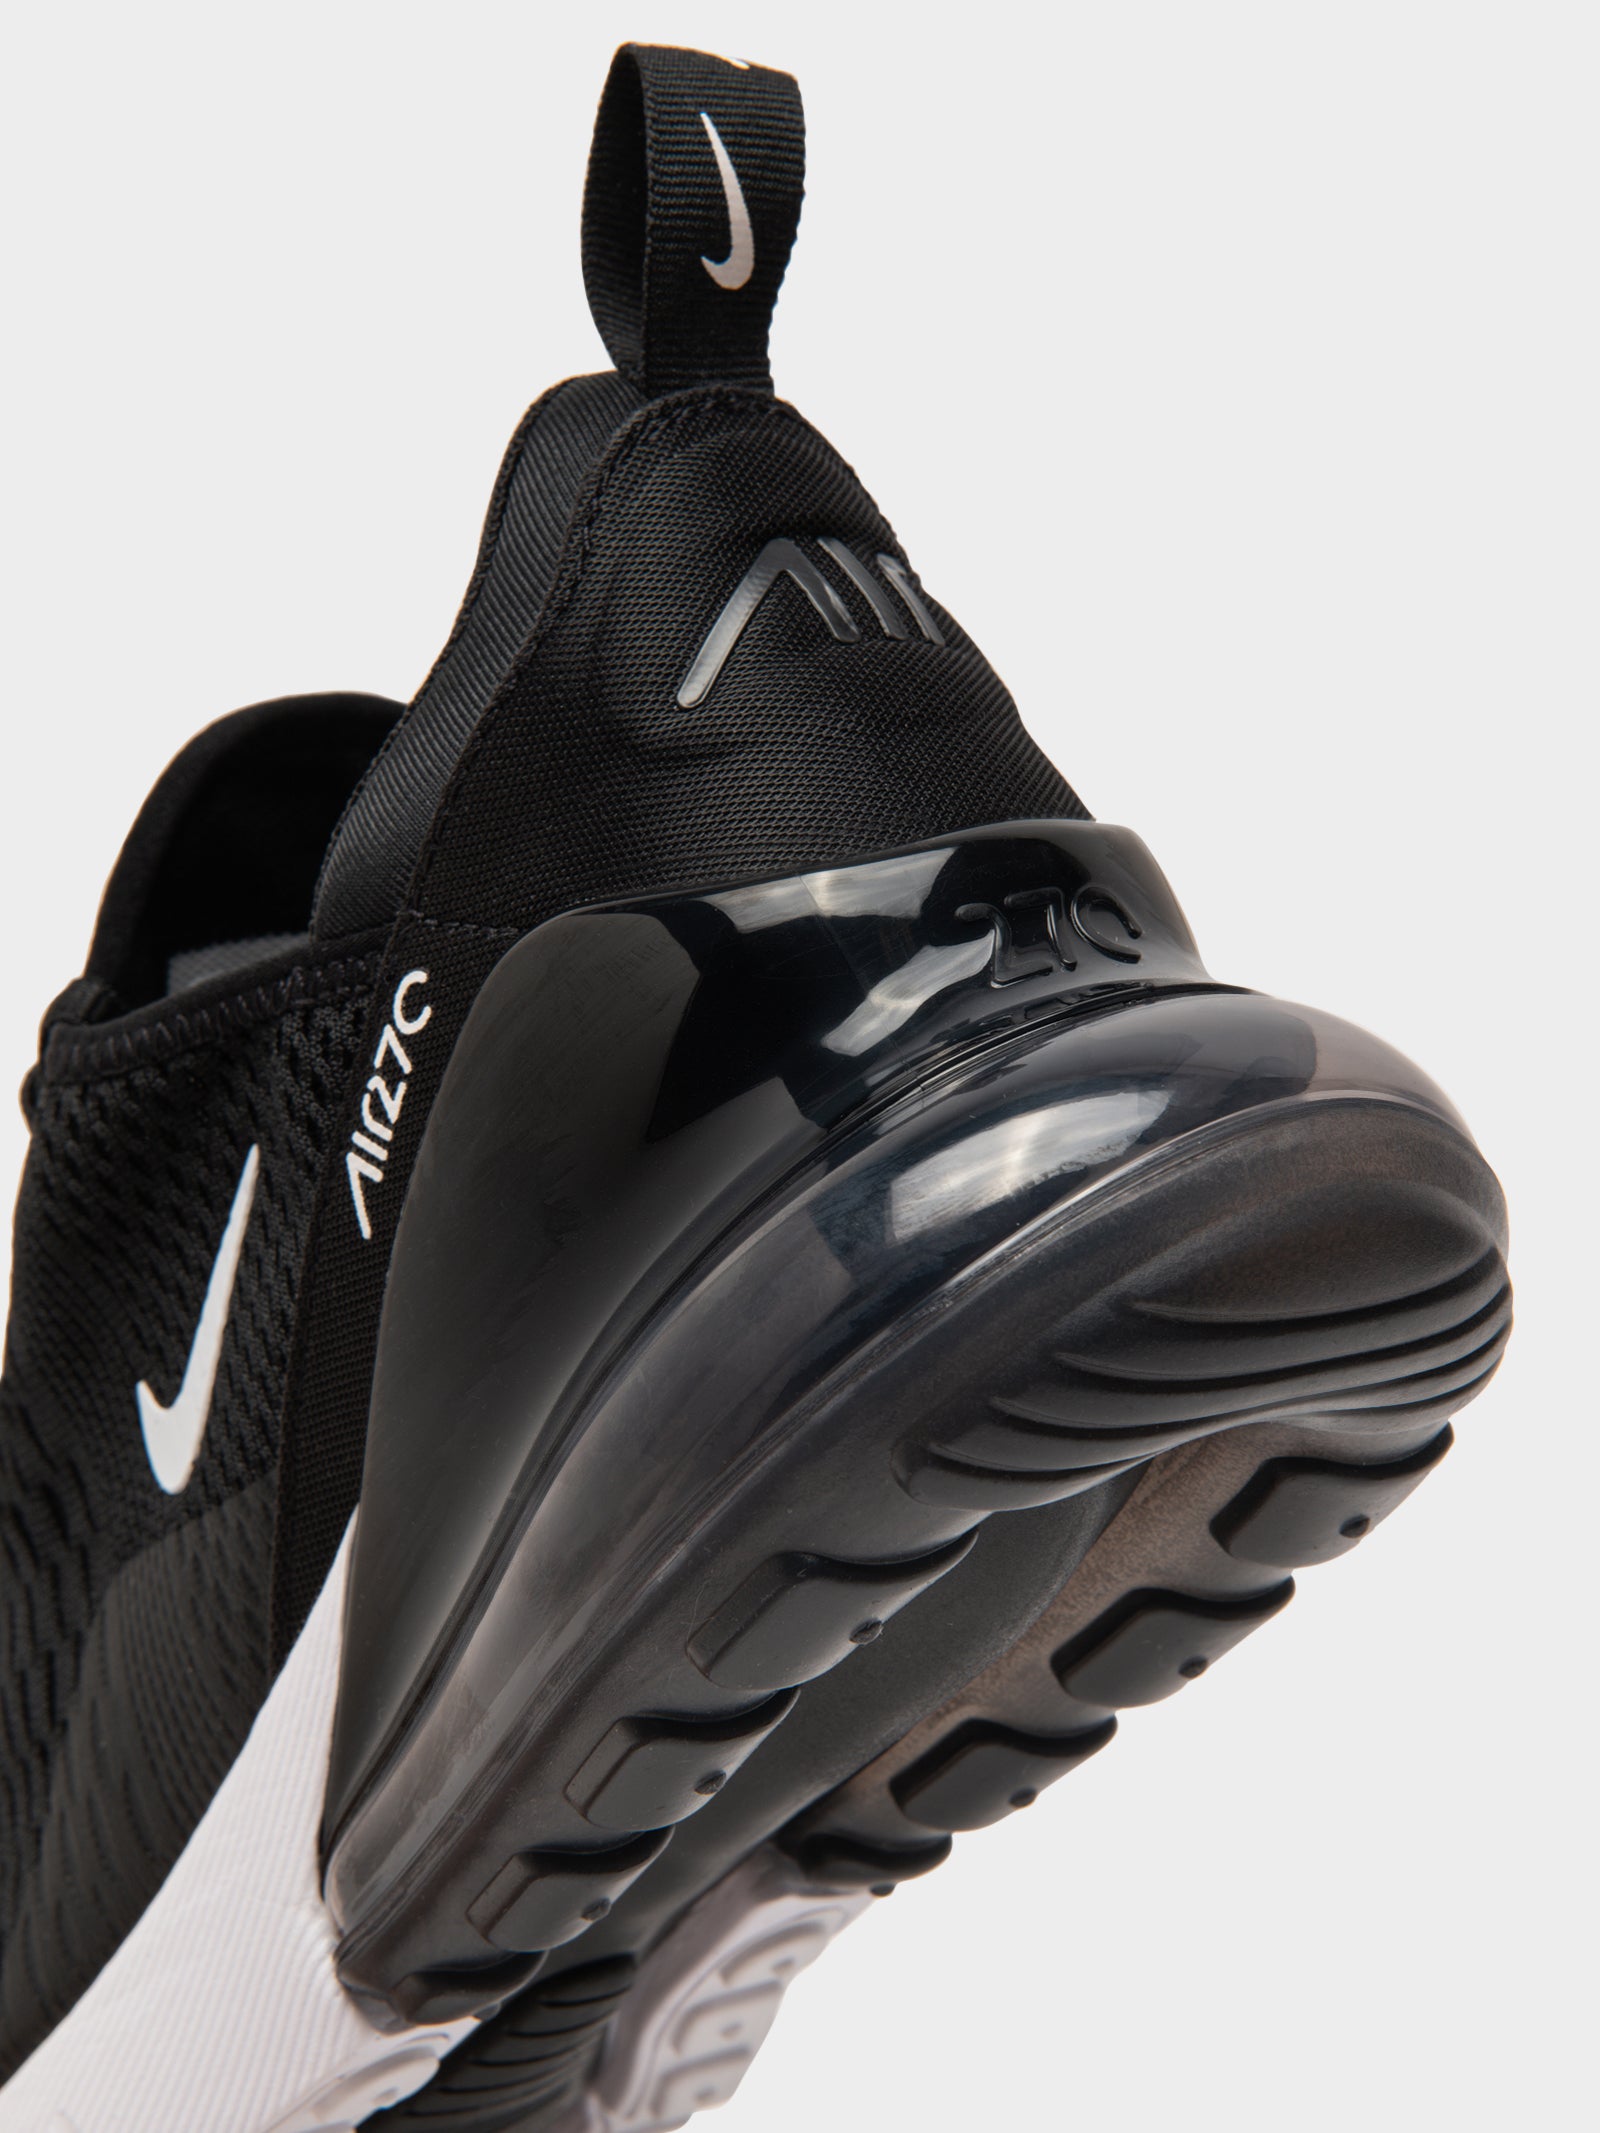 Nike Air Max 270 Black White (Women's)